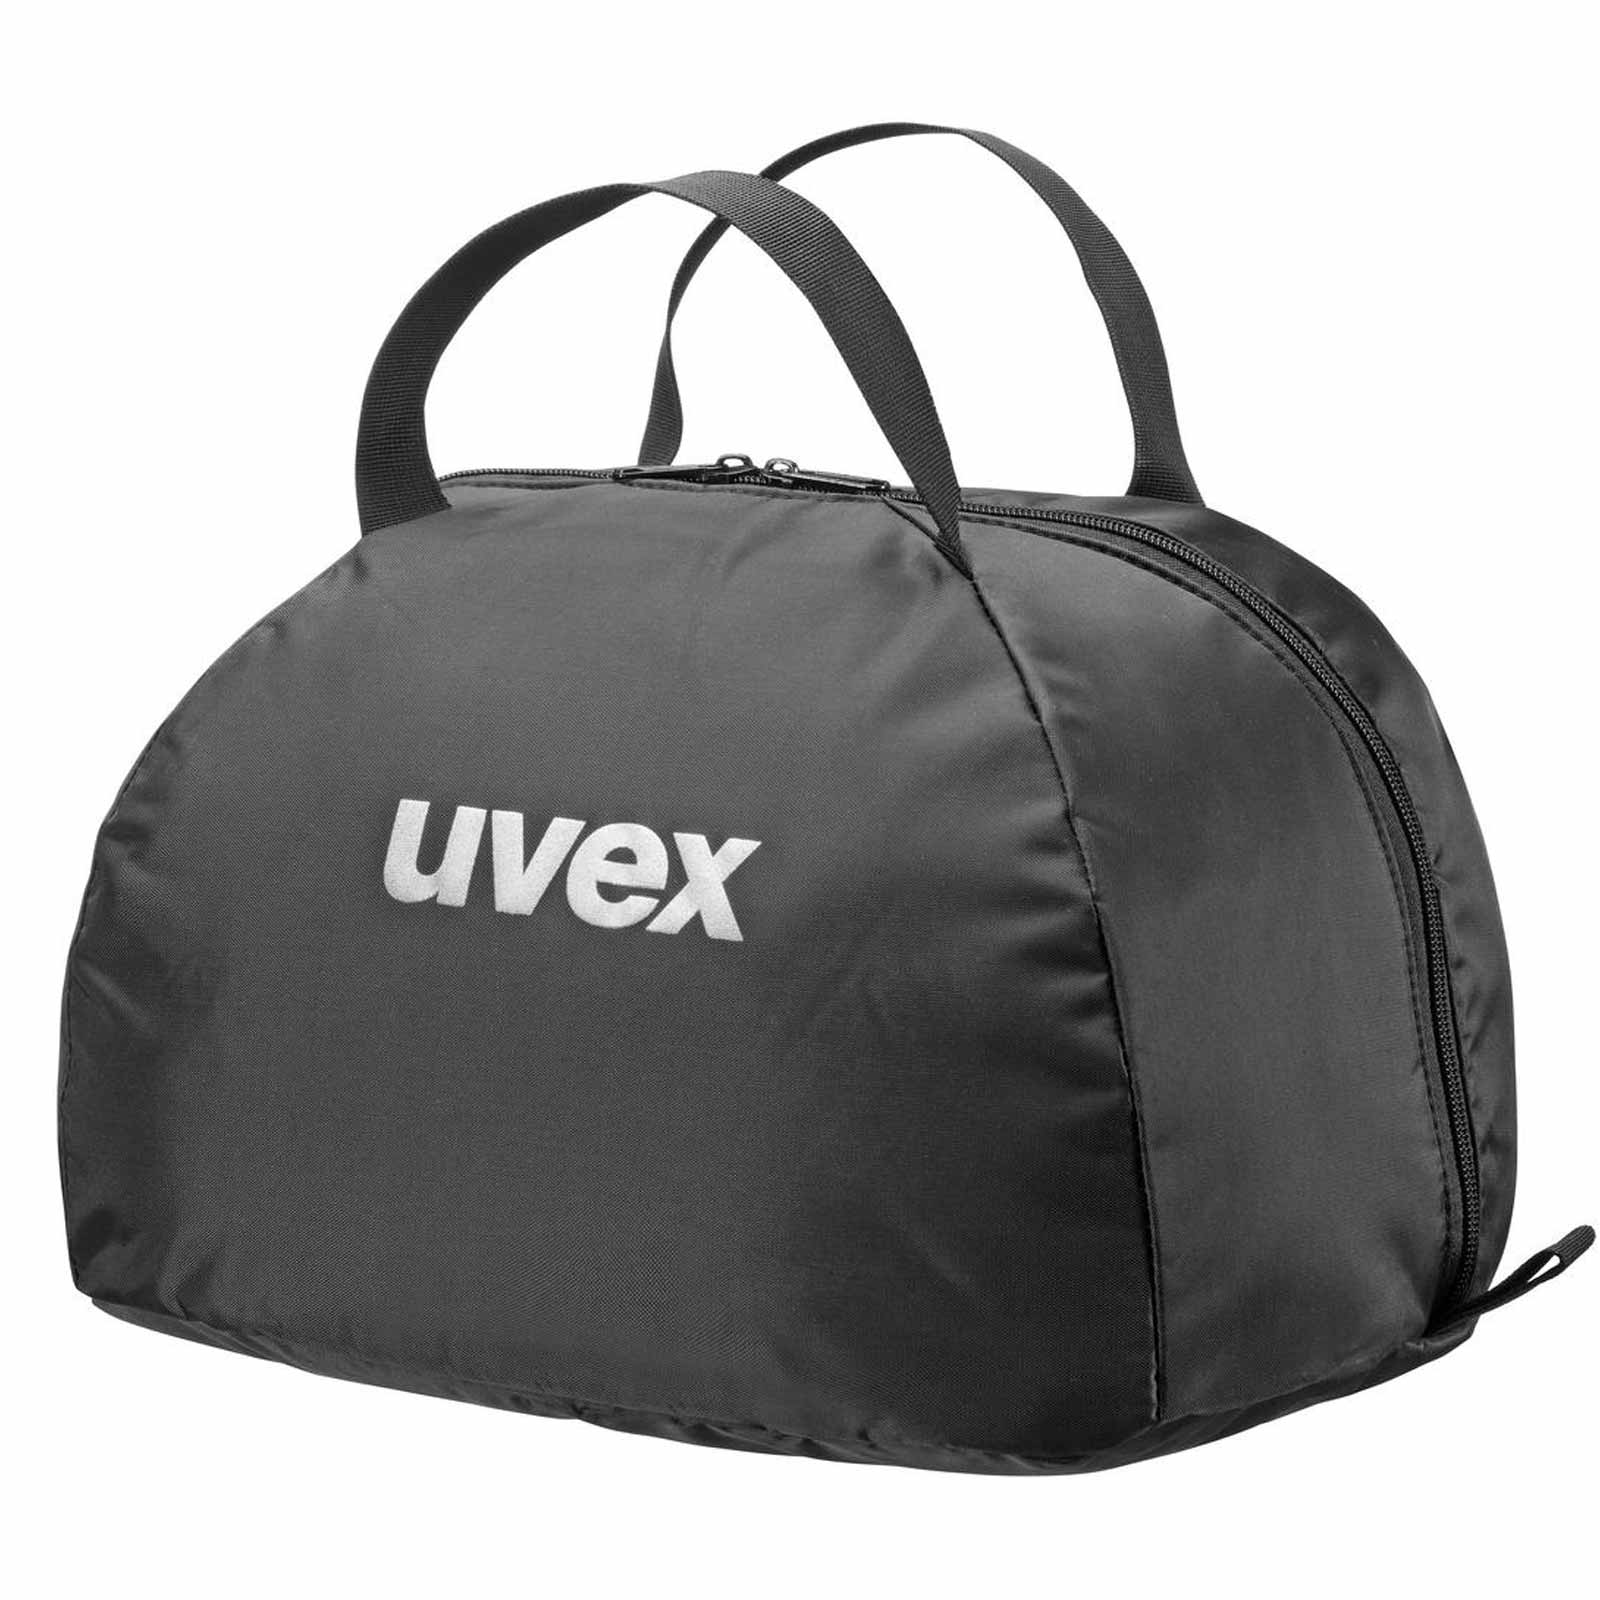 uvex Riding Helmet Bag black